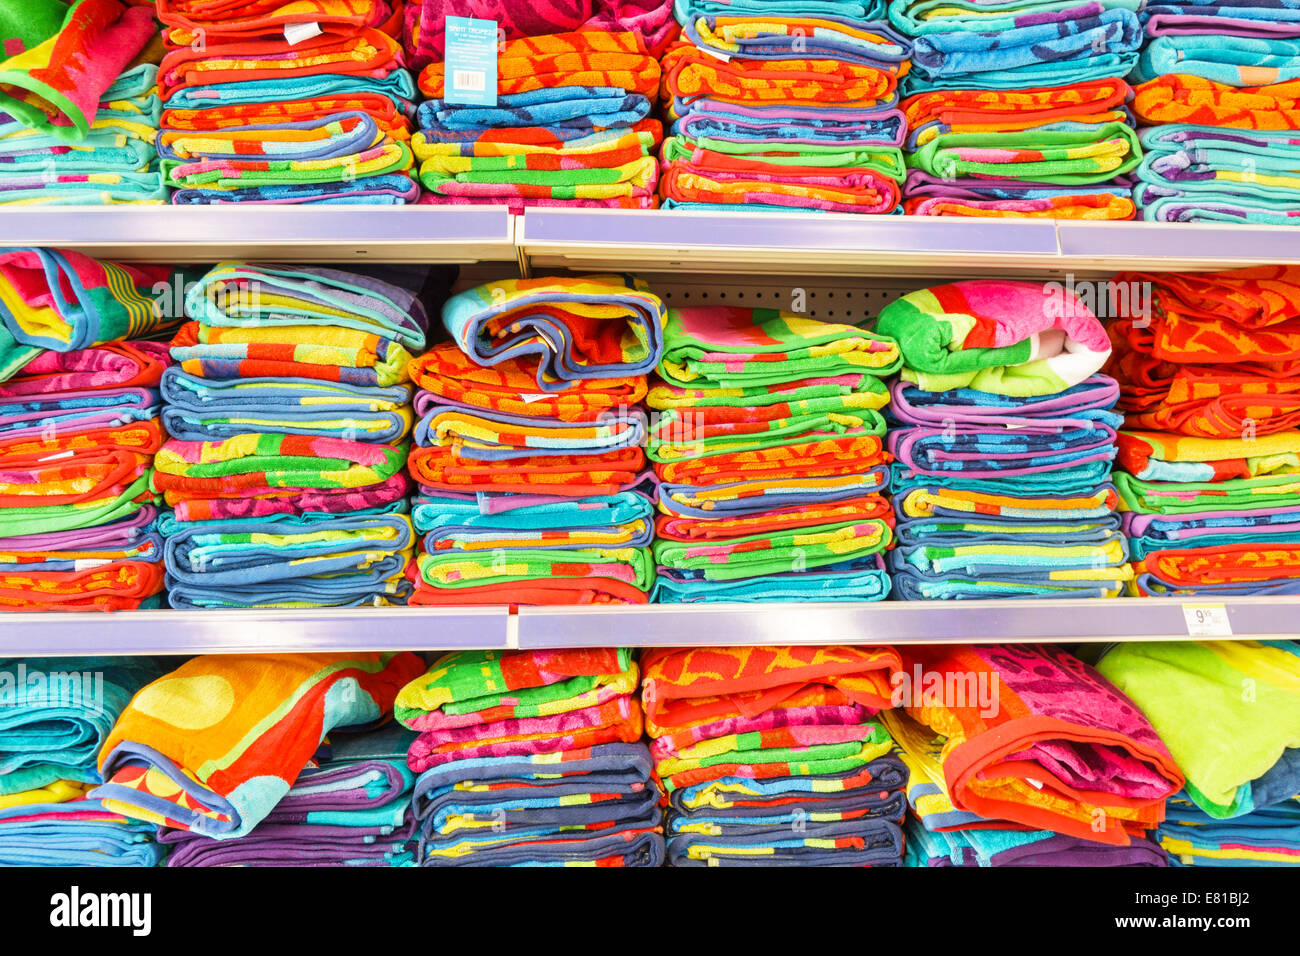 Miami Beach Florida,Walgreens,display sale organized,beach towels,colorful,FL140305018 Stock Photo